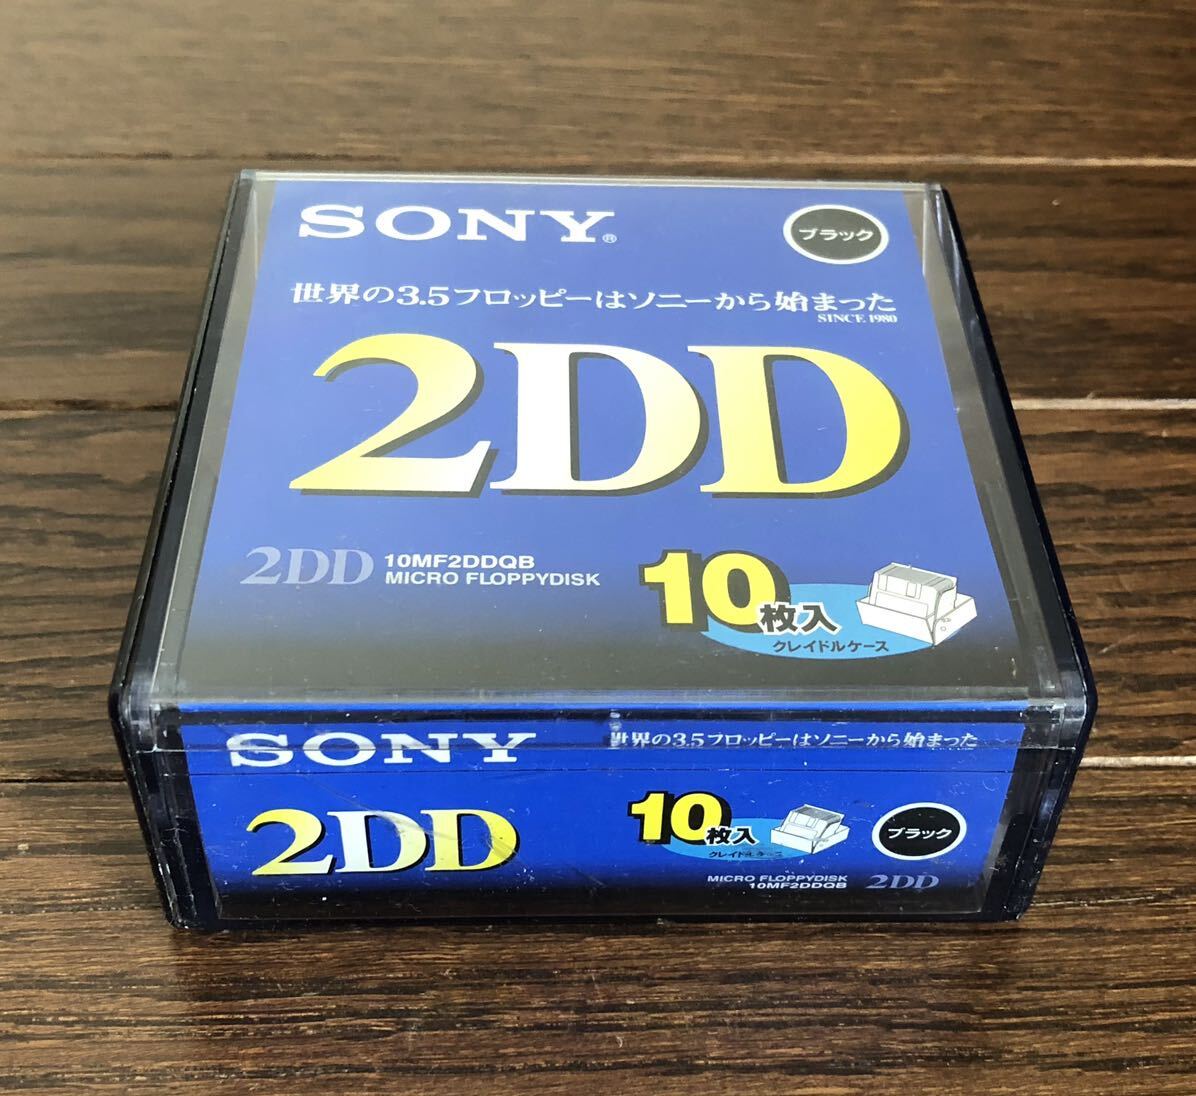  очень редкий . входить для person пожалуйста!SONY 3.5 type дискета 2DD10 листов входит внутри осталось 5 листов Sony 1990 годы передний половина 